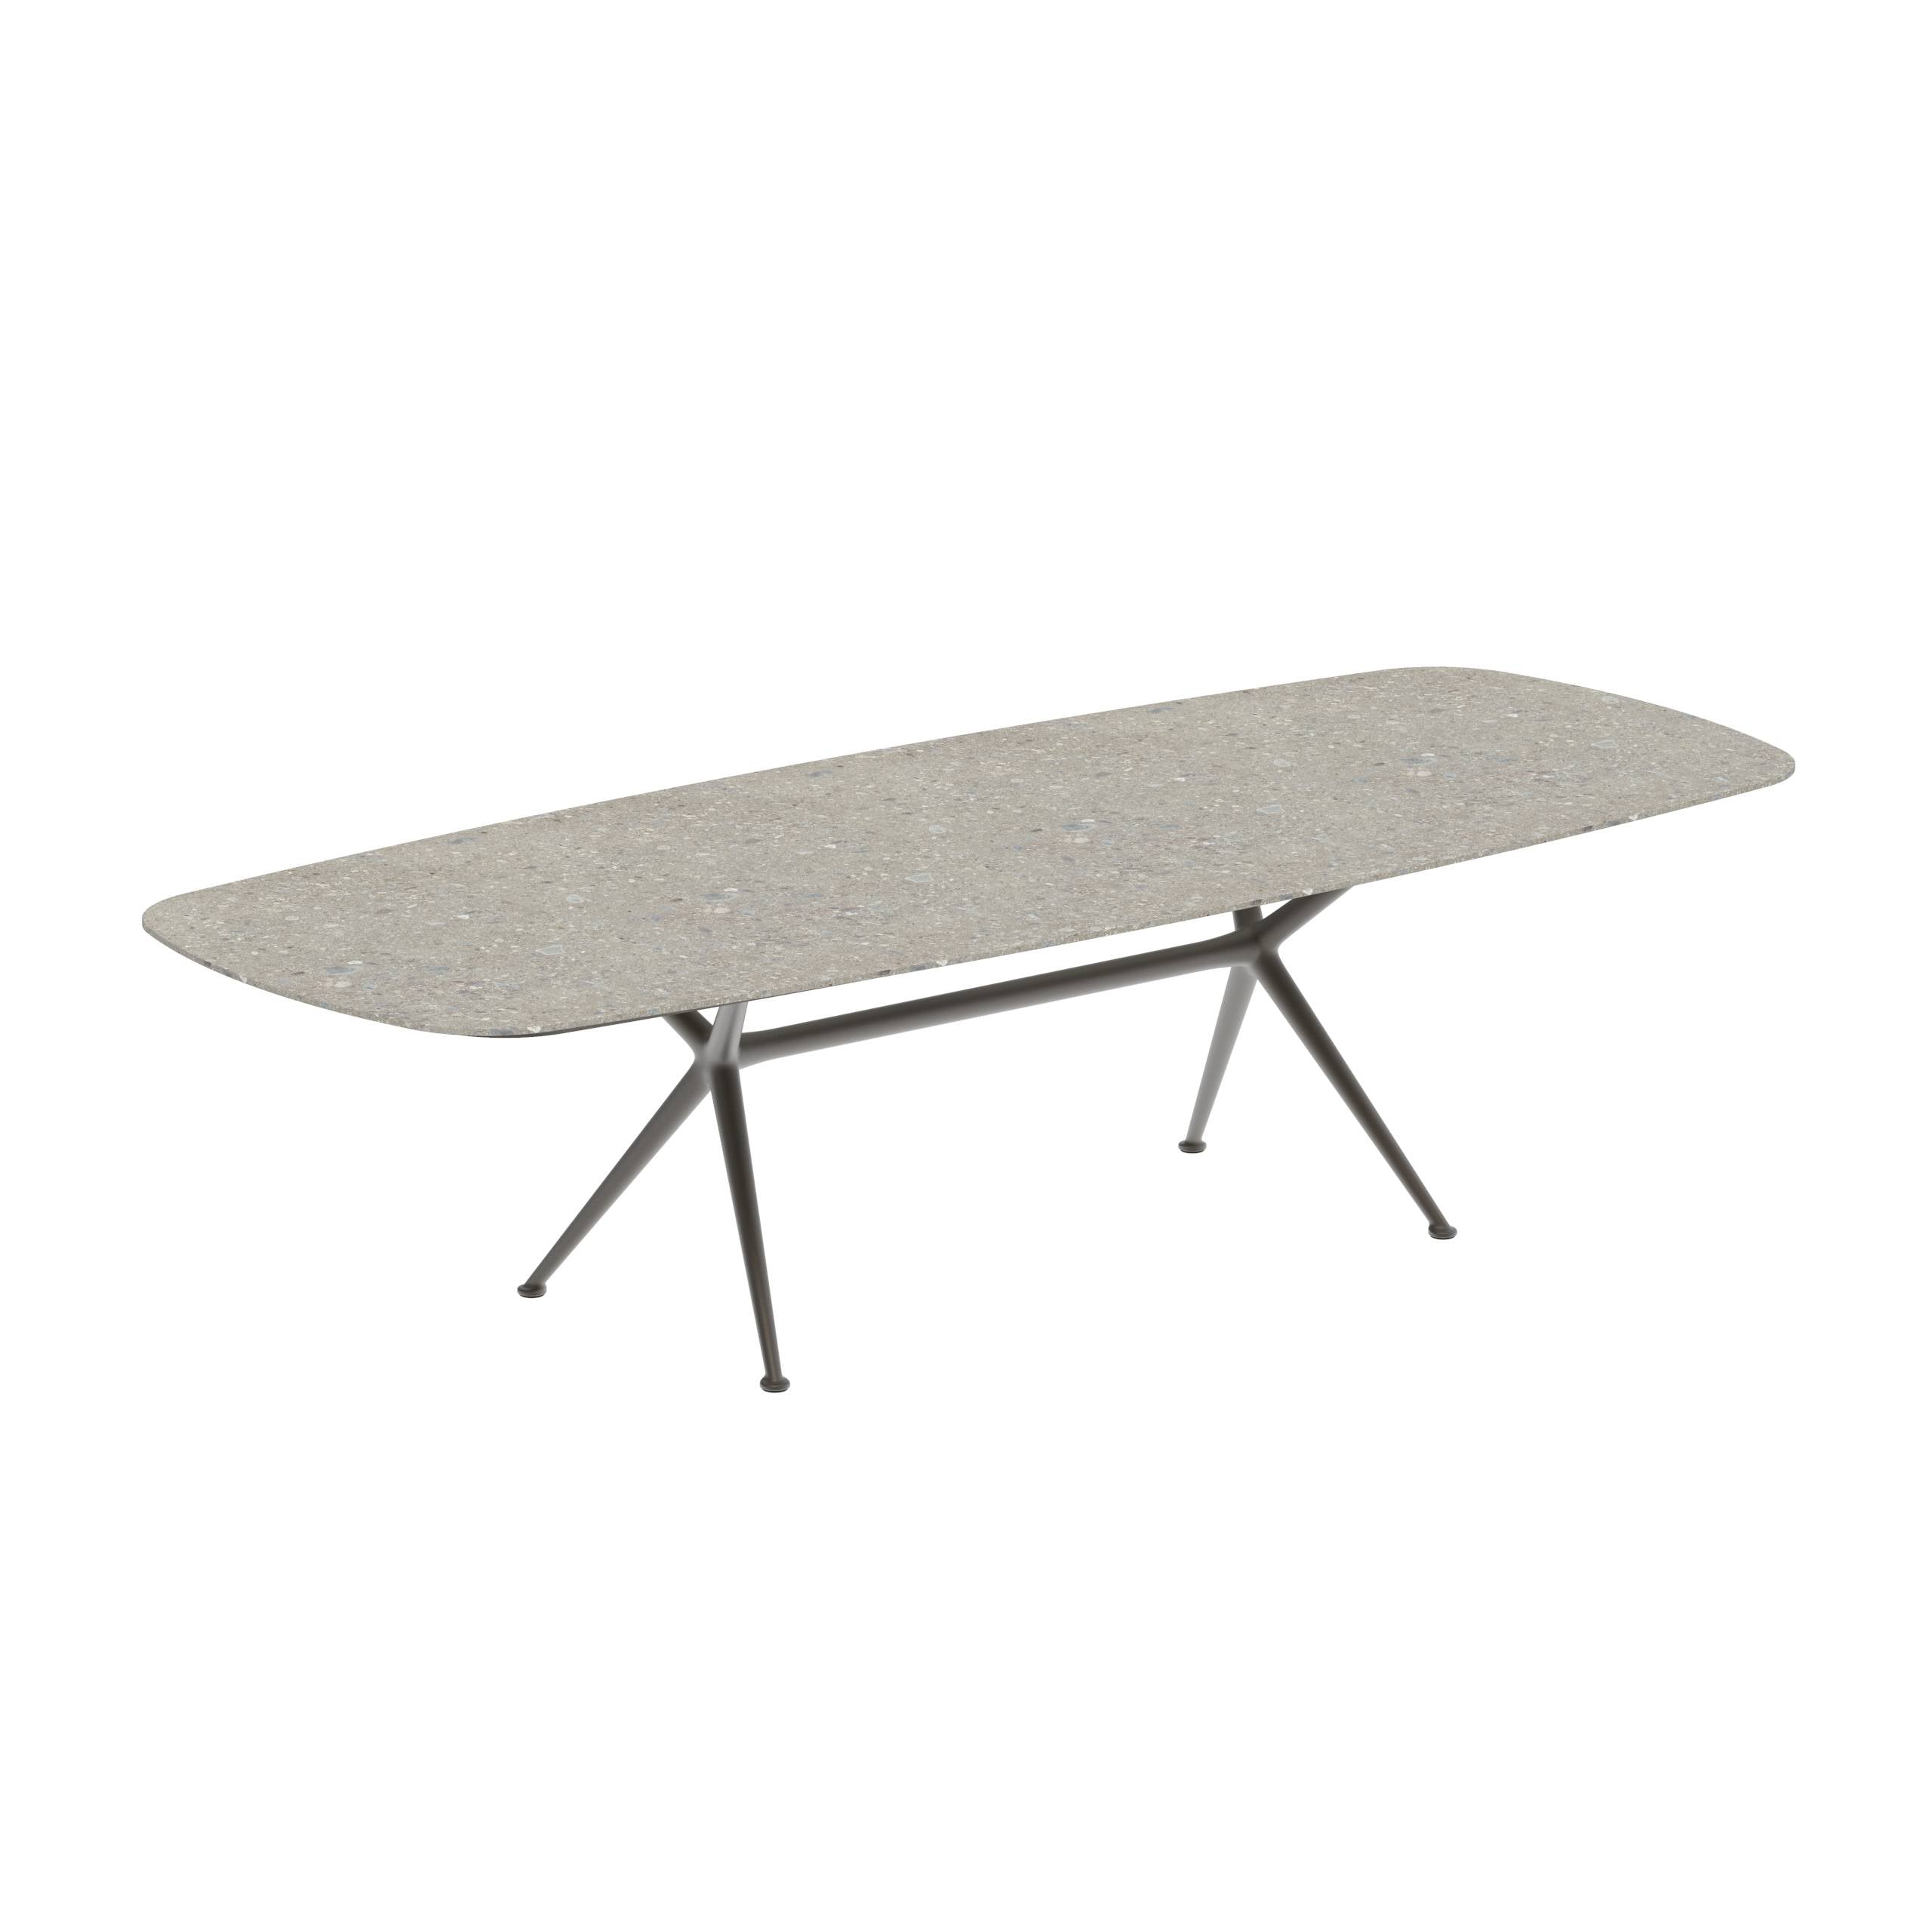 Exes Table 300x120cm Alu Legs Bronze - Table Top Ceramic Ceppo Dolomitica